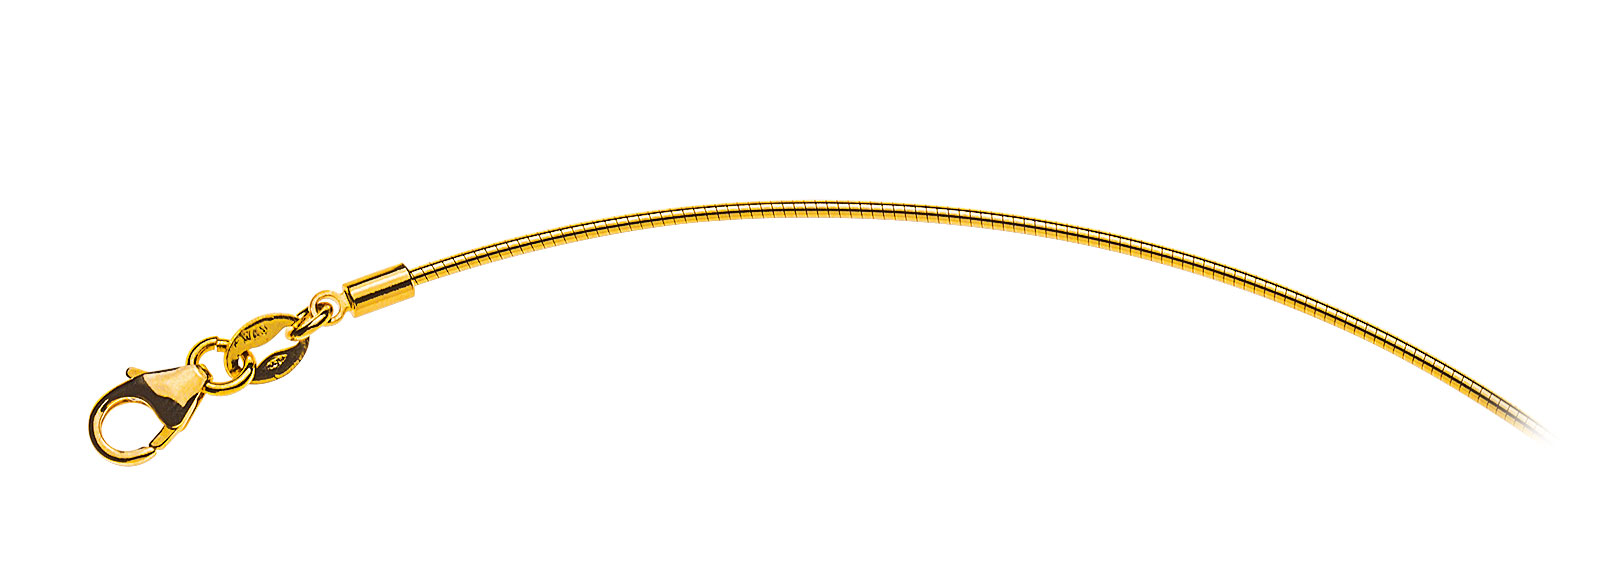 AURONOS Prestige Necklace yellow gold 18K omega chain 40cm 1.0mm